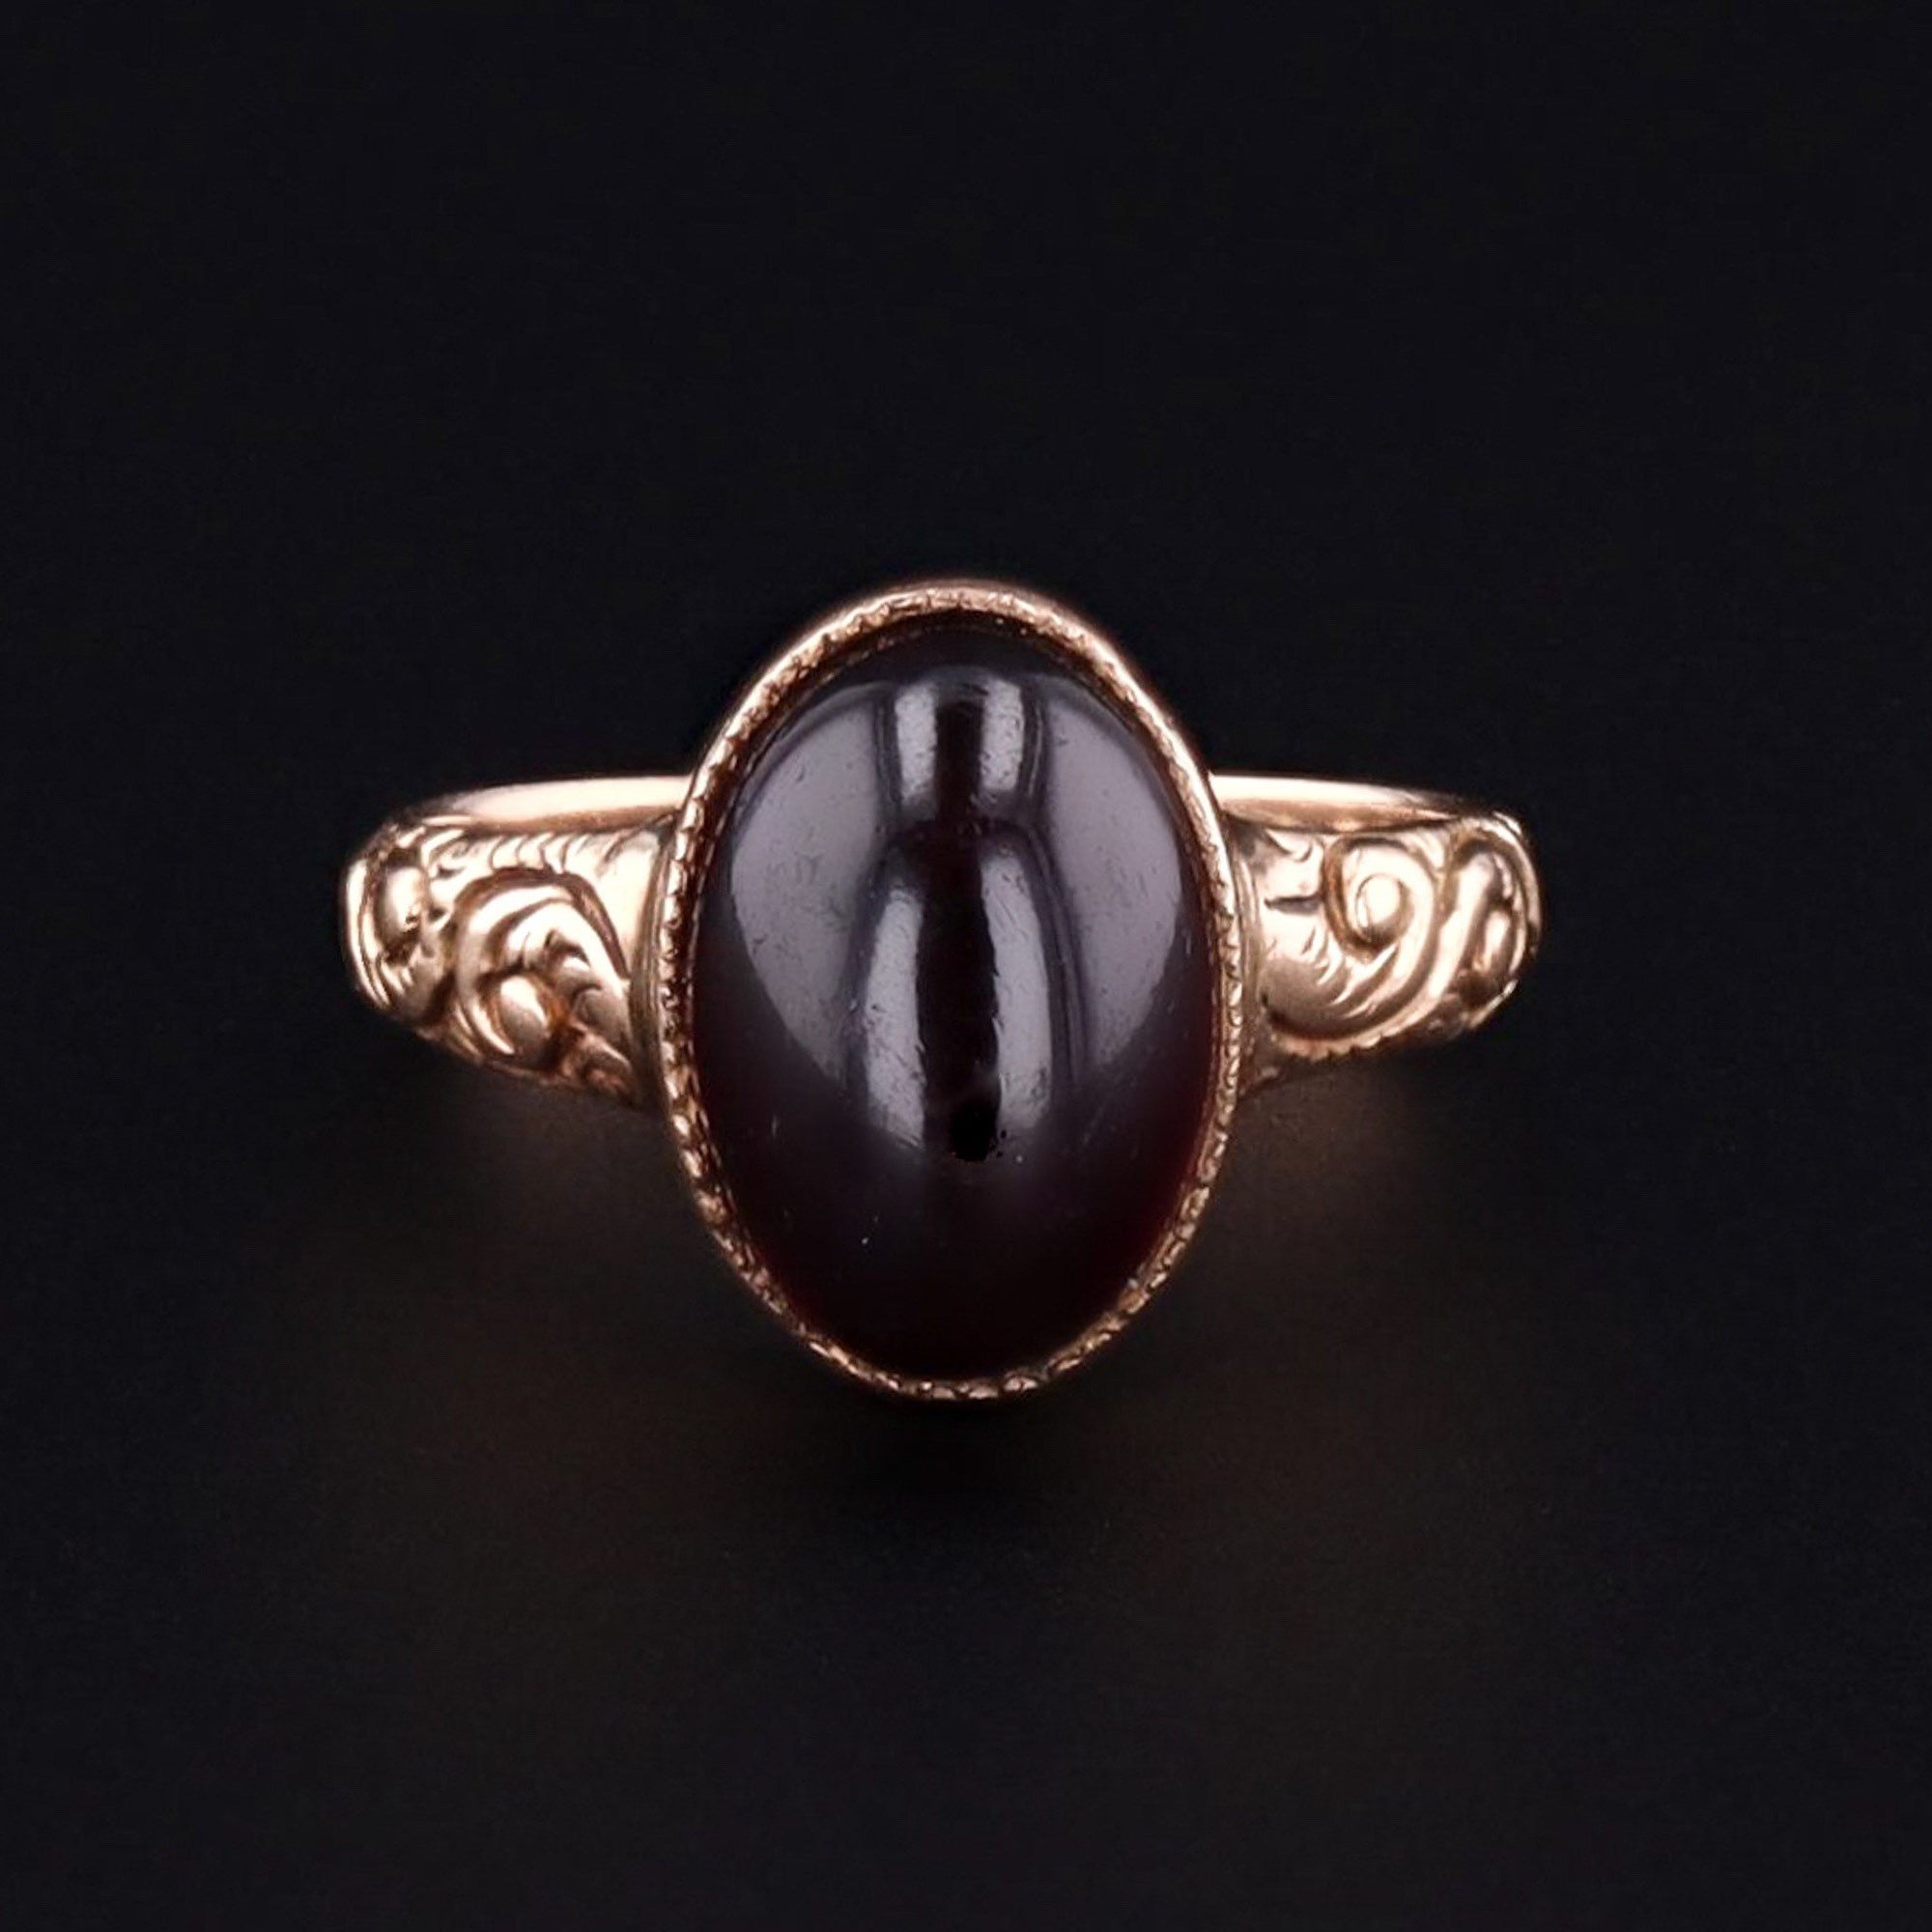 Antique Garnet Ring | 10k Gold Garnet Ring | Antique Ring | January Birthstone Ring | 10k Gold Ring | Gemstone Ring